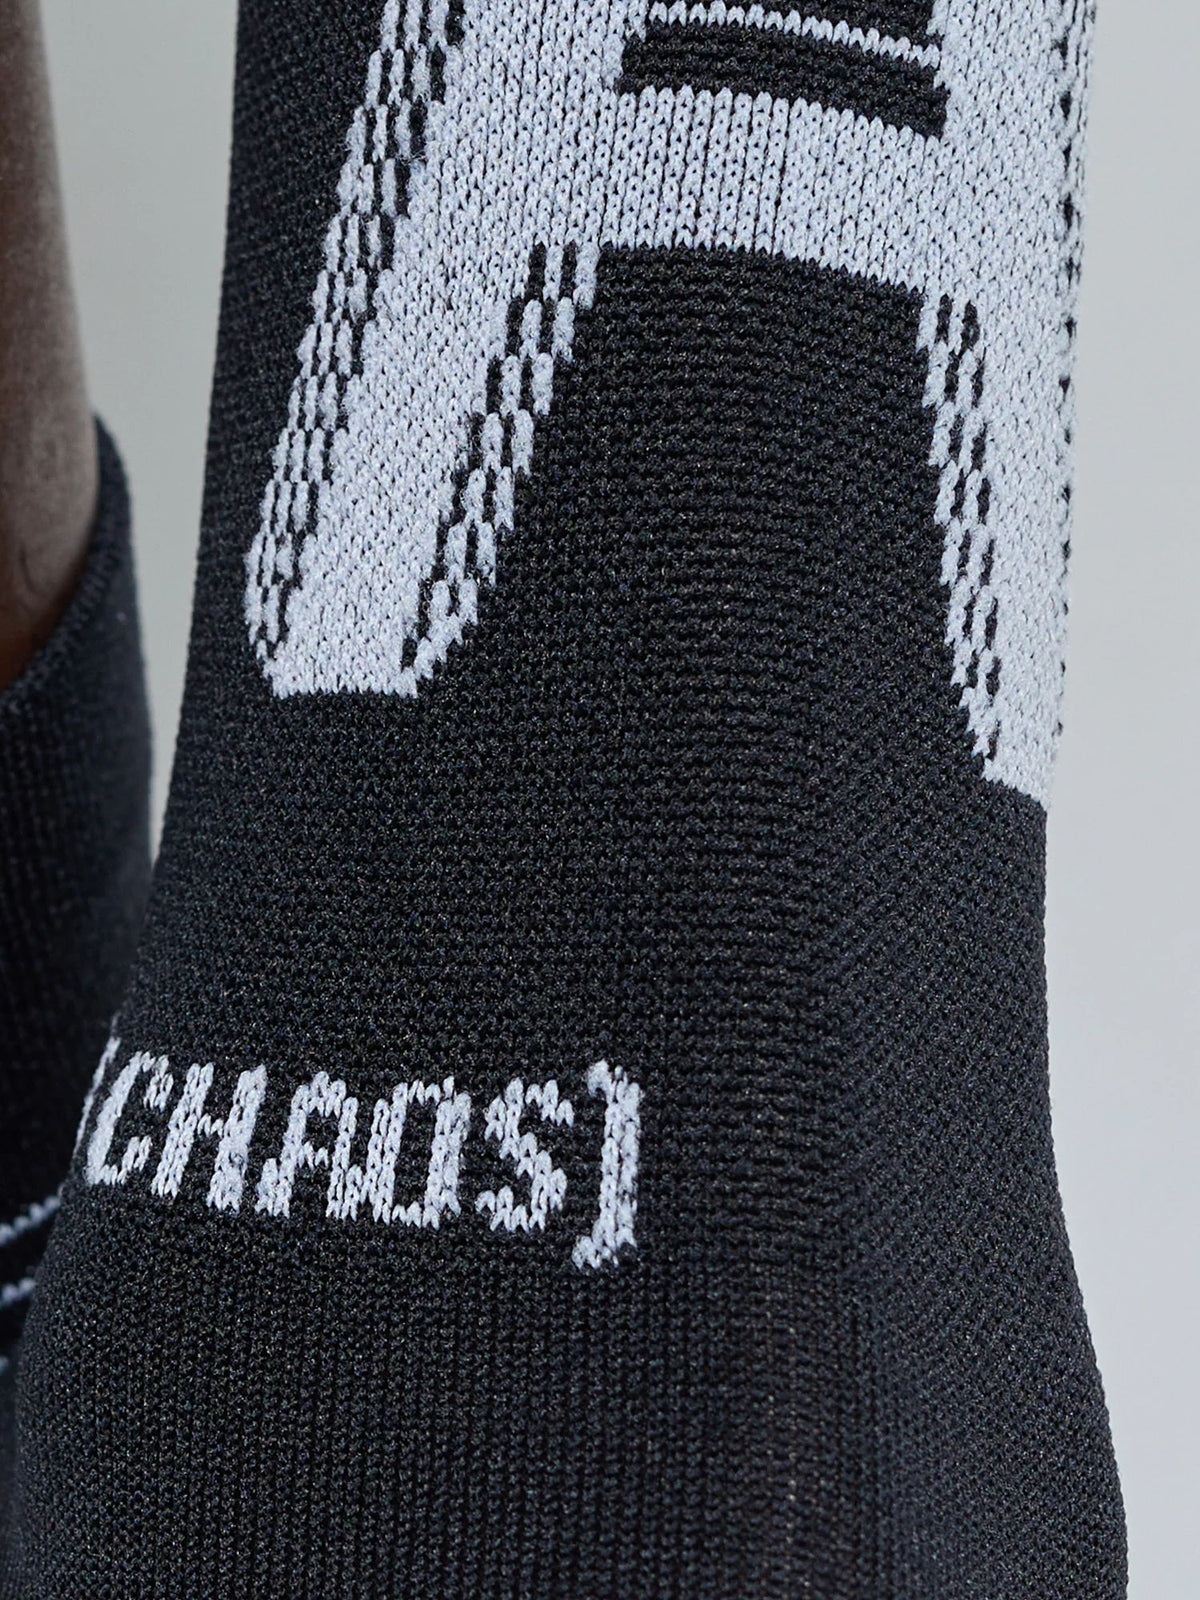 Givelo G-Socks Chaos Black サイクル ソックス | GEARED